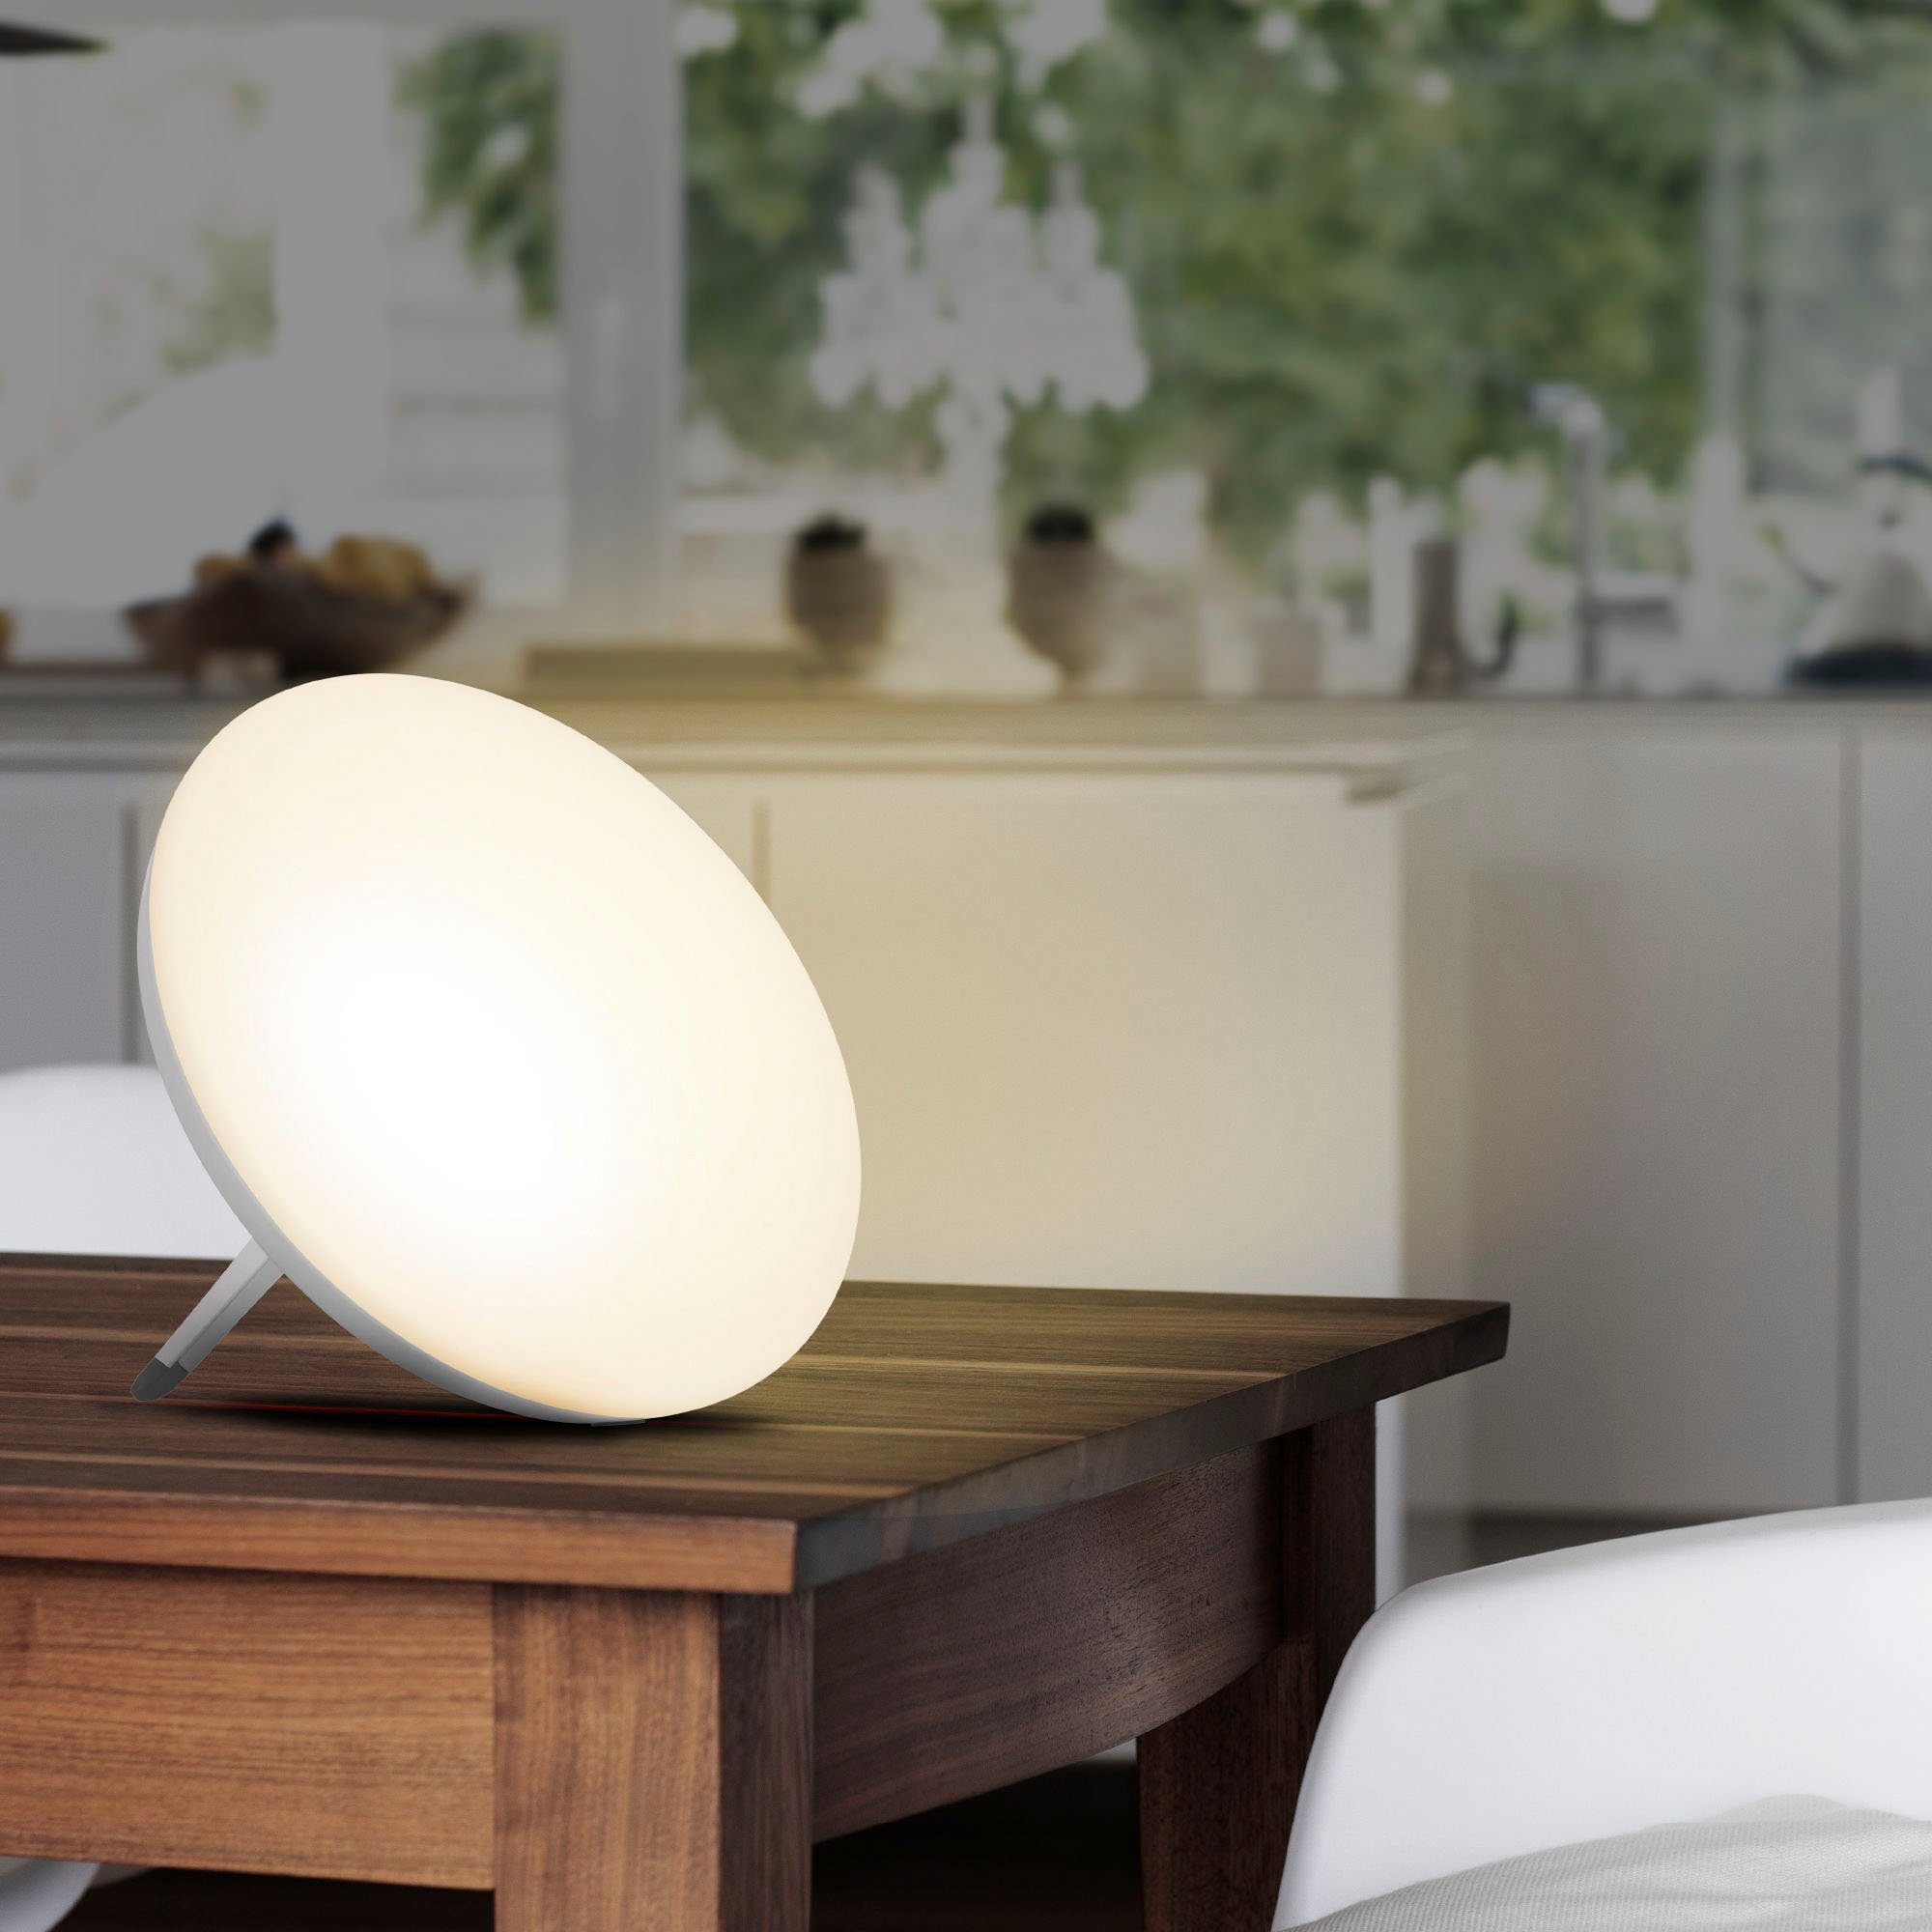 Medisana LED Warmweiß LT500, Tageslichtlampe Farbwechsel, integriert, fest